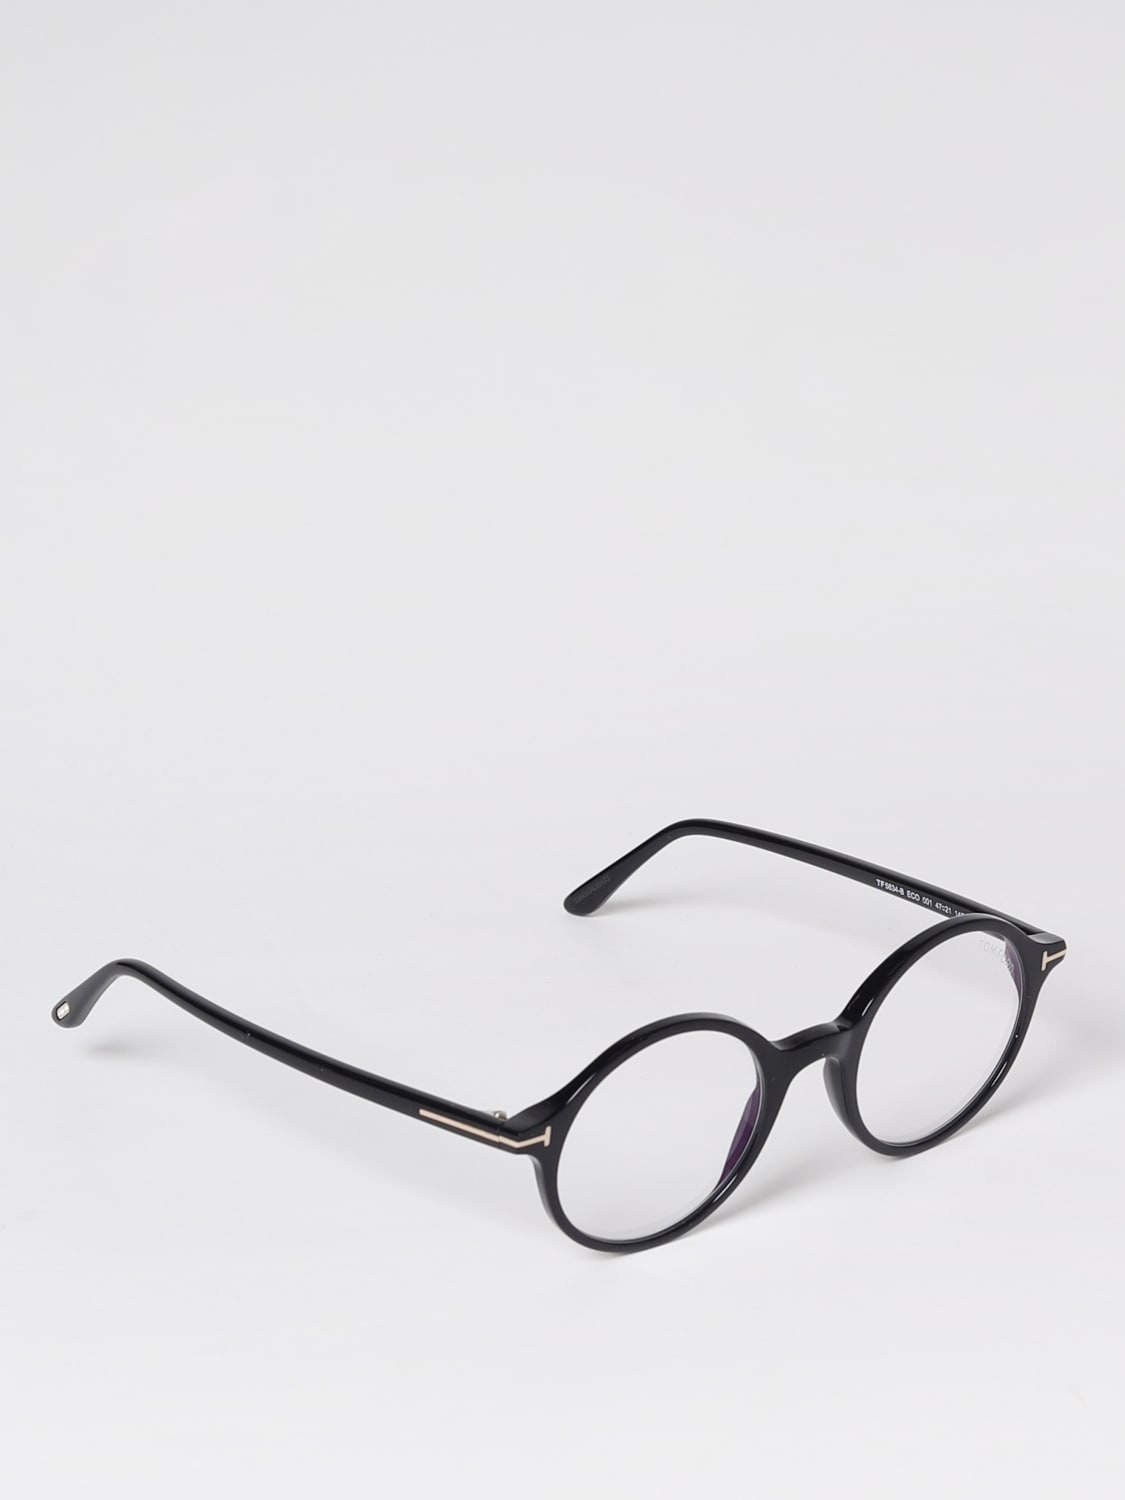 Tom Ford Outlet: sunglasses for man - Black | Tom Ford sunglasses ...